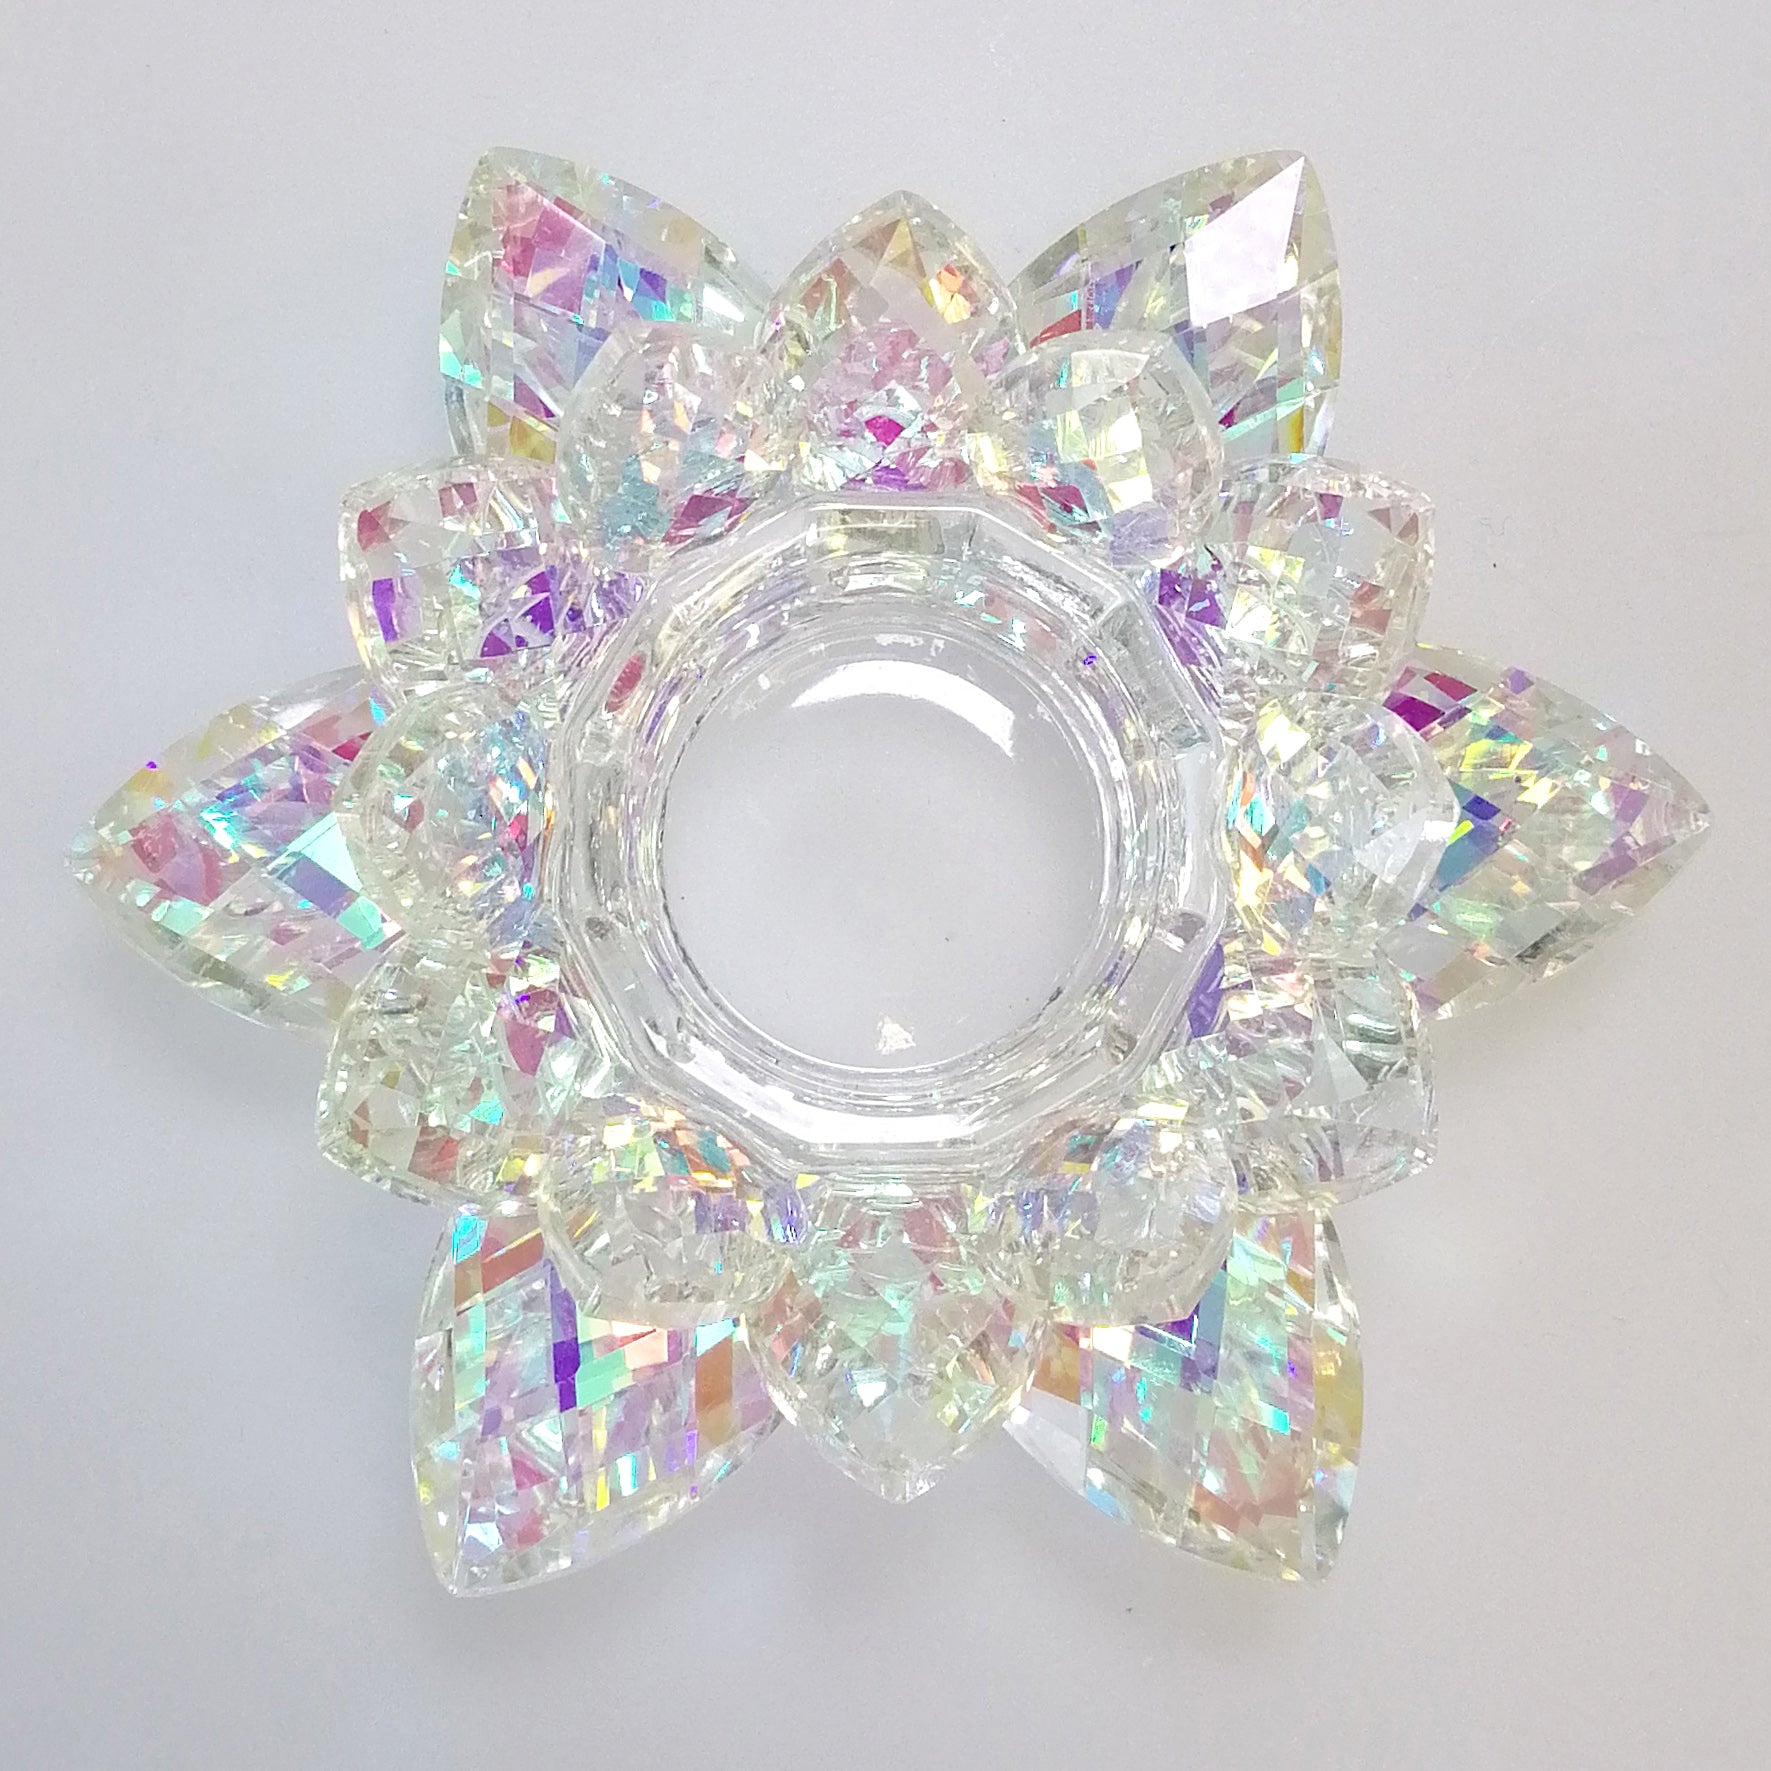 Iridescent Cut Glass Wreath Candle Holder